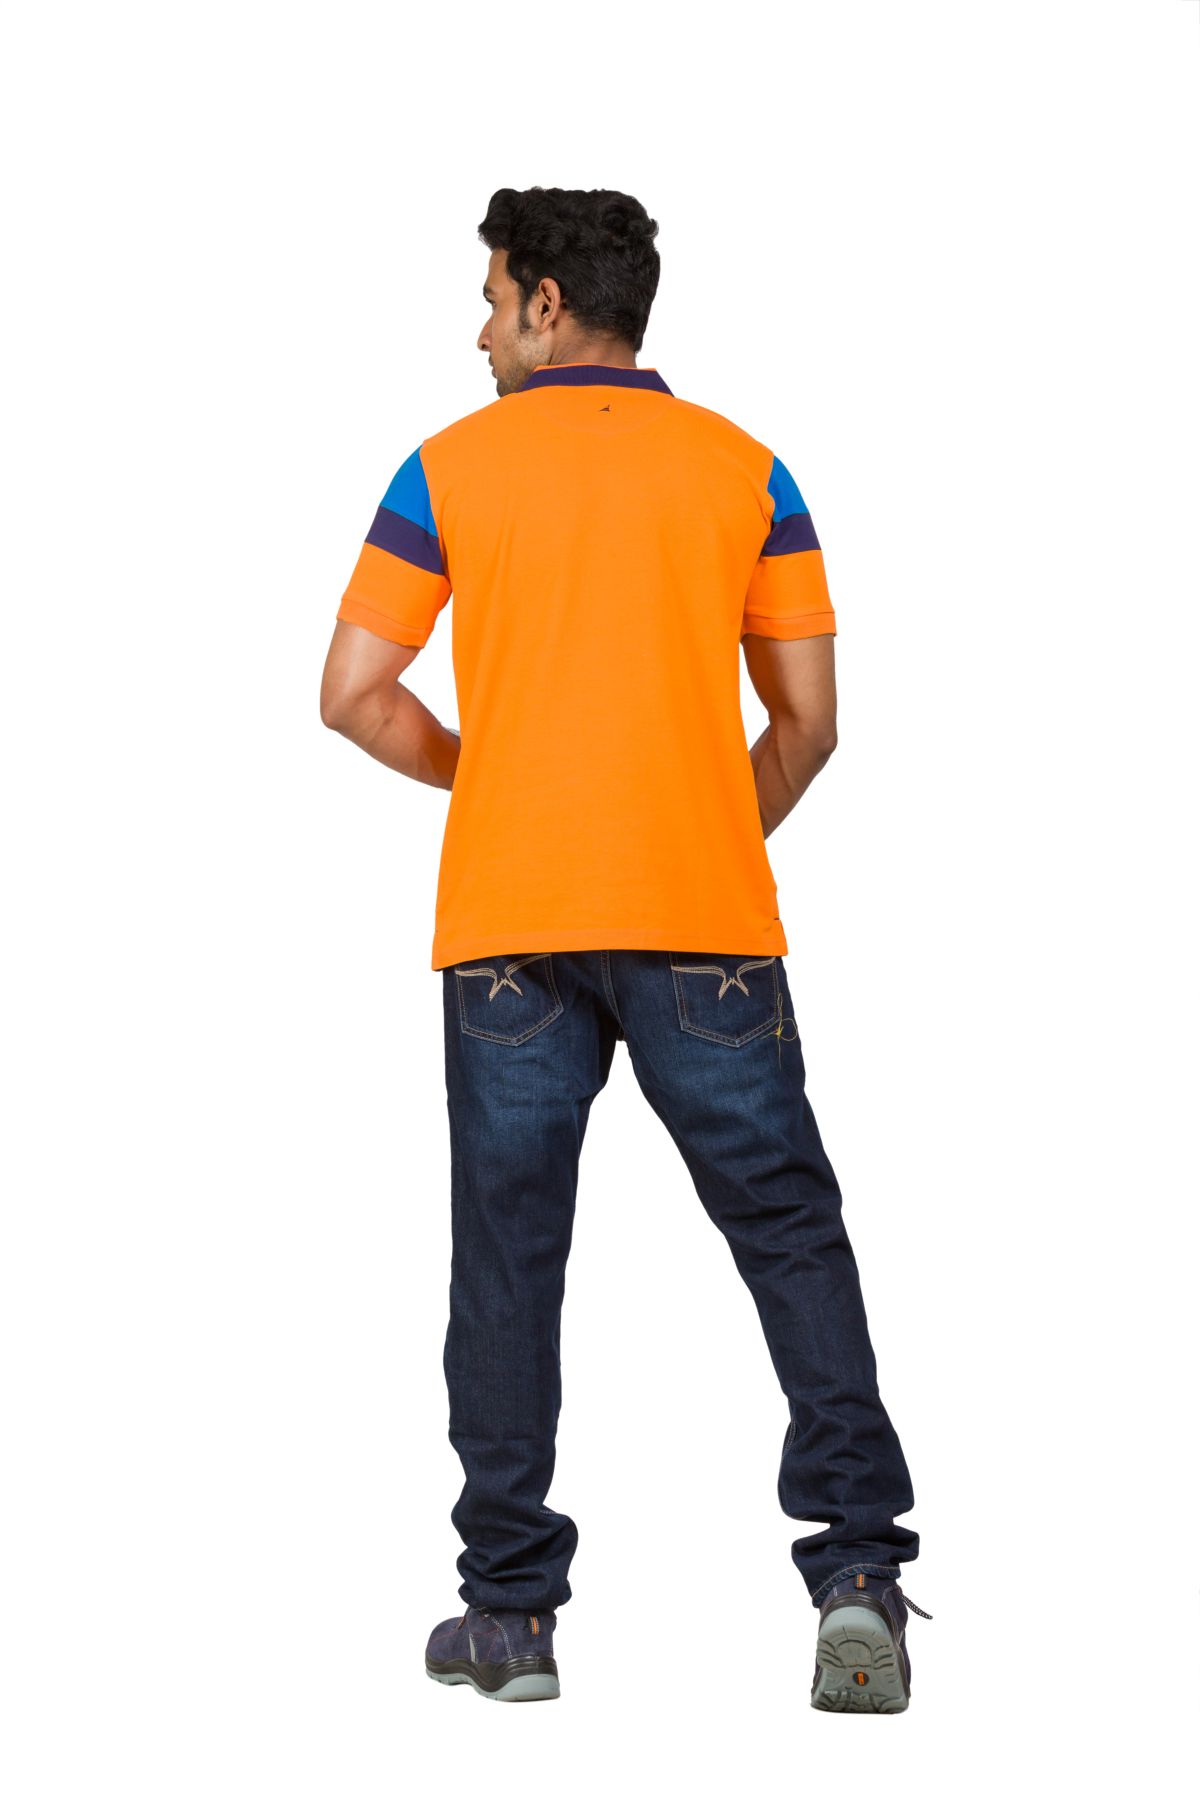 Cotton Blend Polo T-shirt Orange-Blue-Black For Men